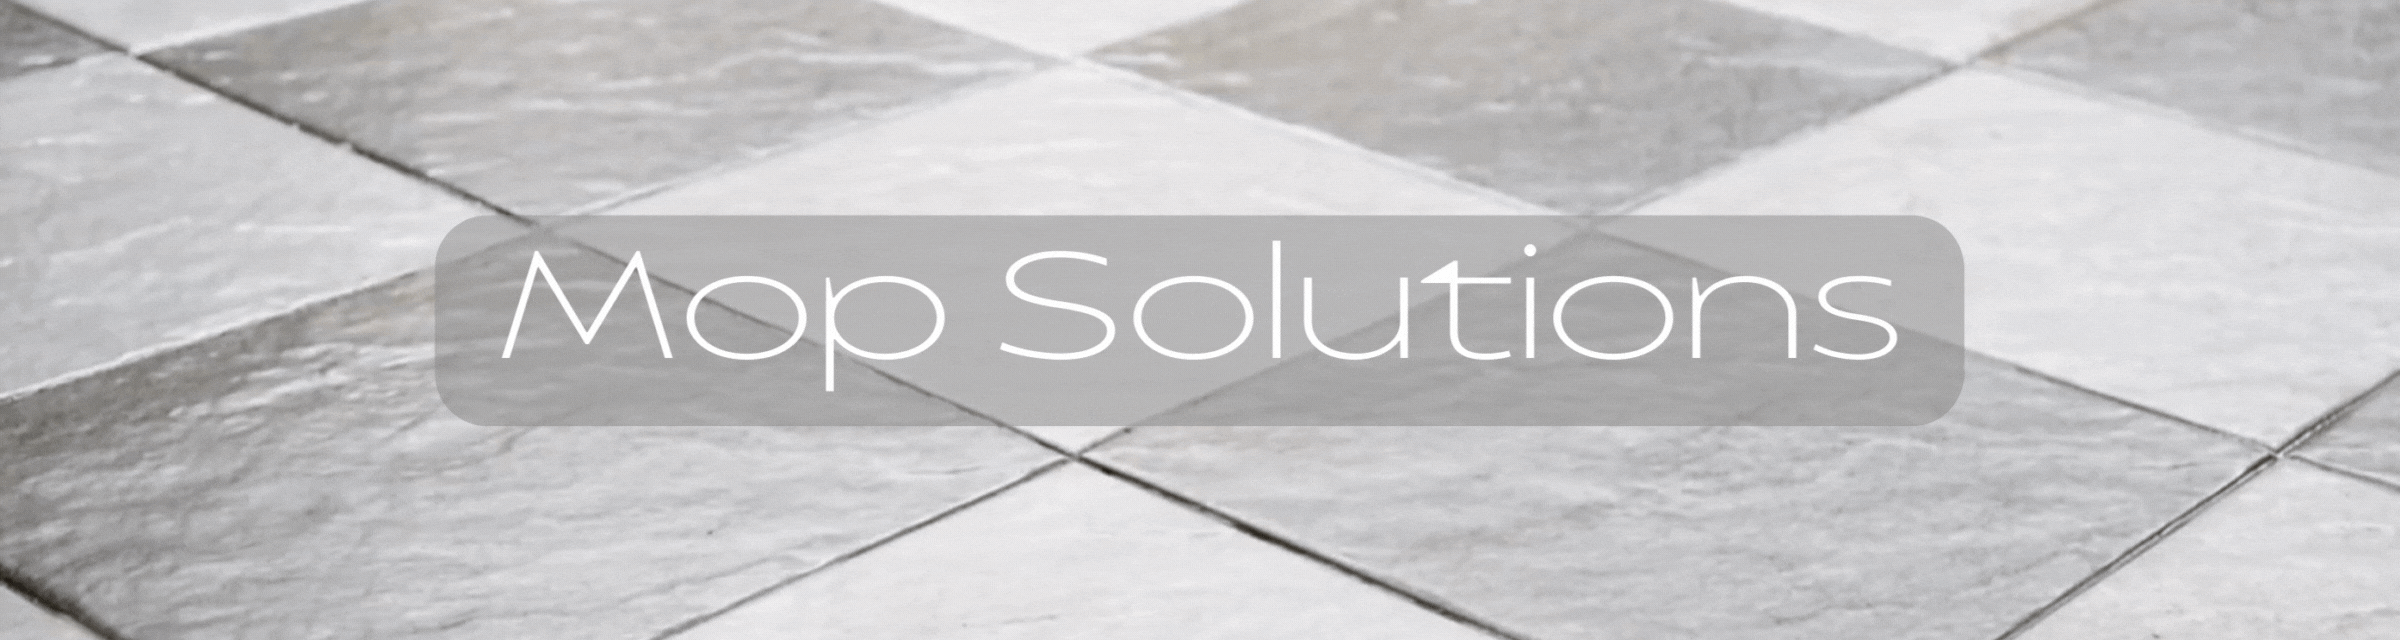 Mop Solutions Banner